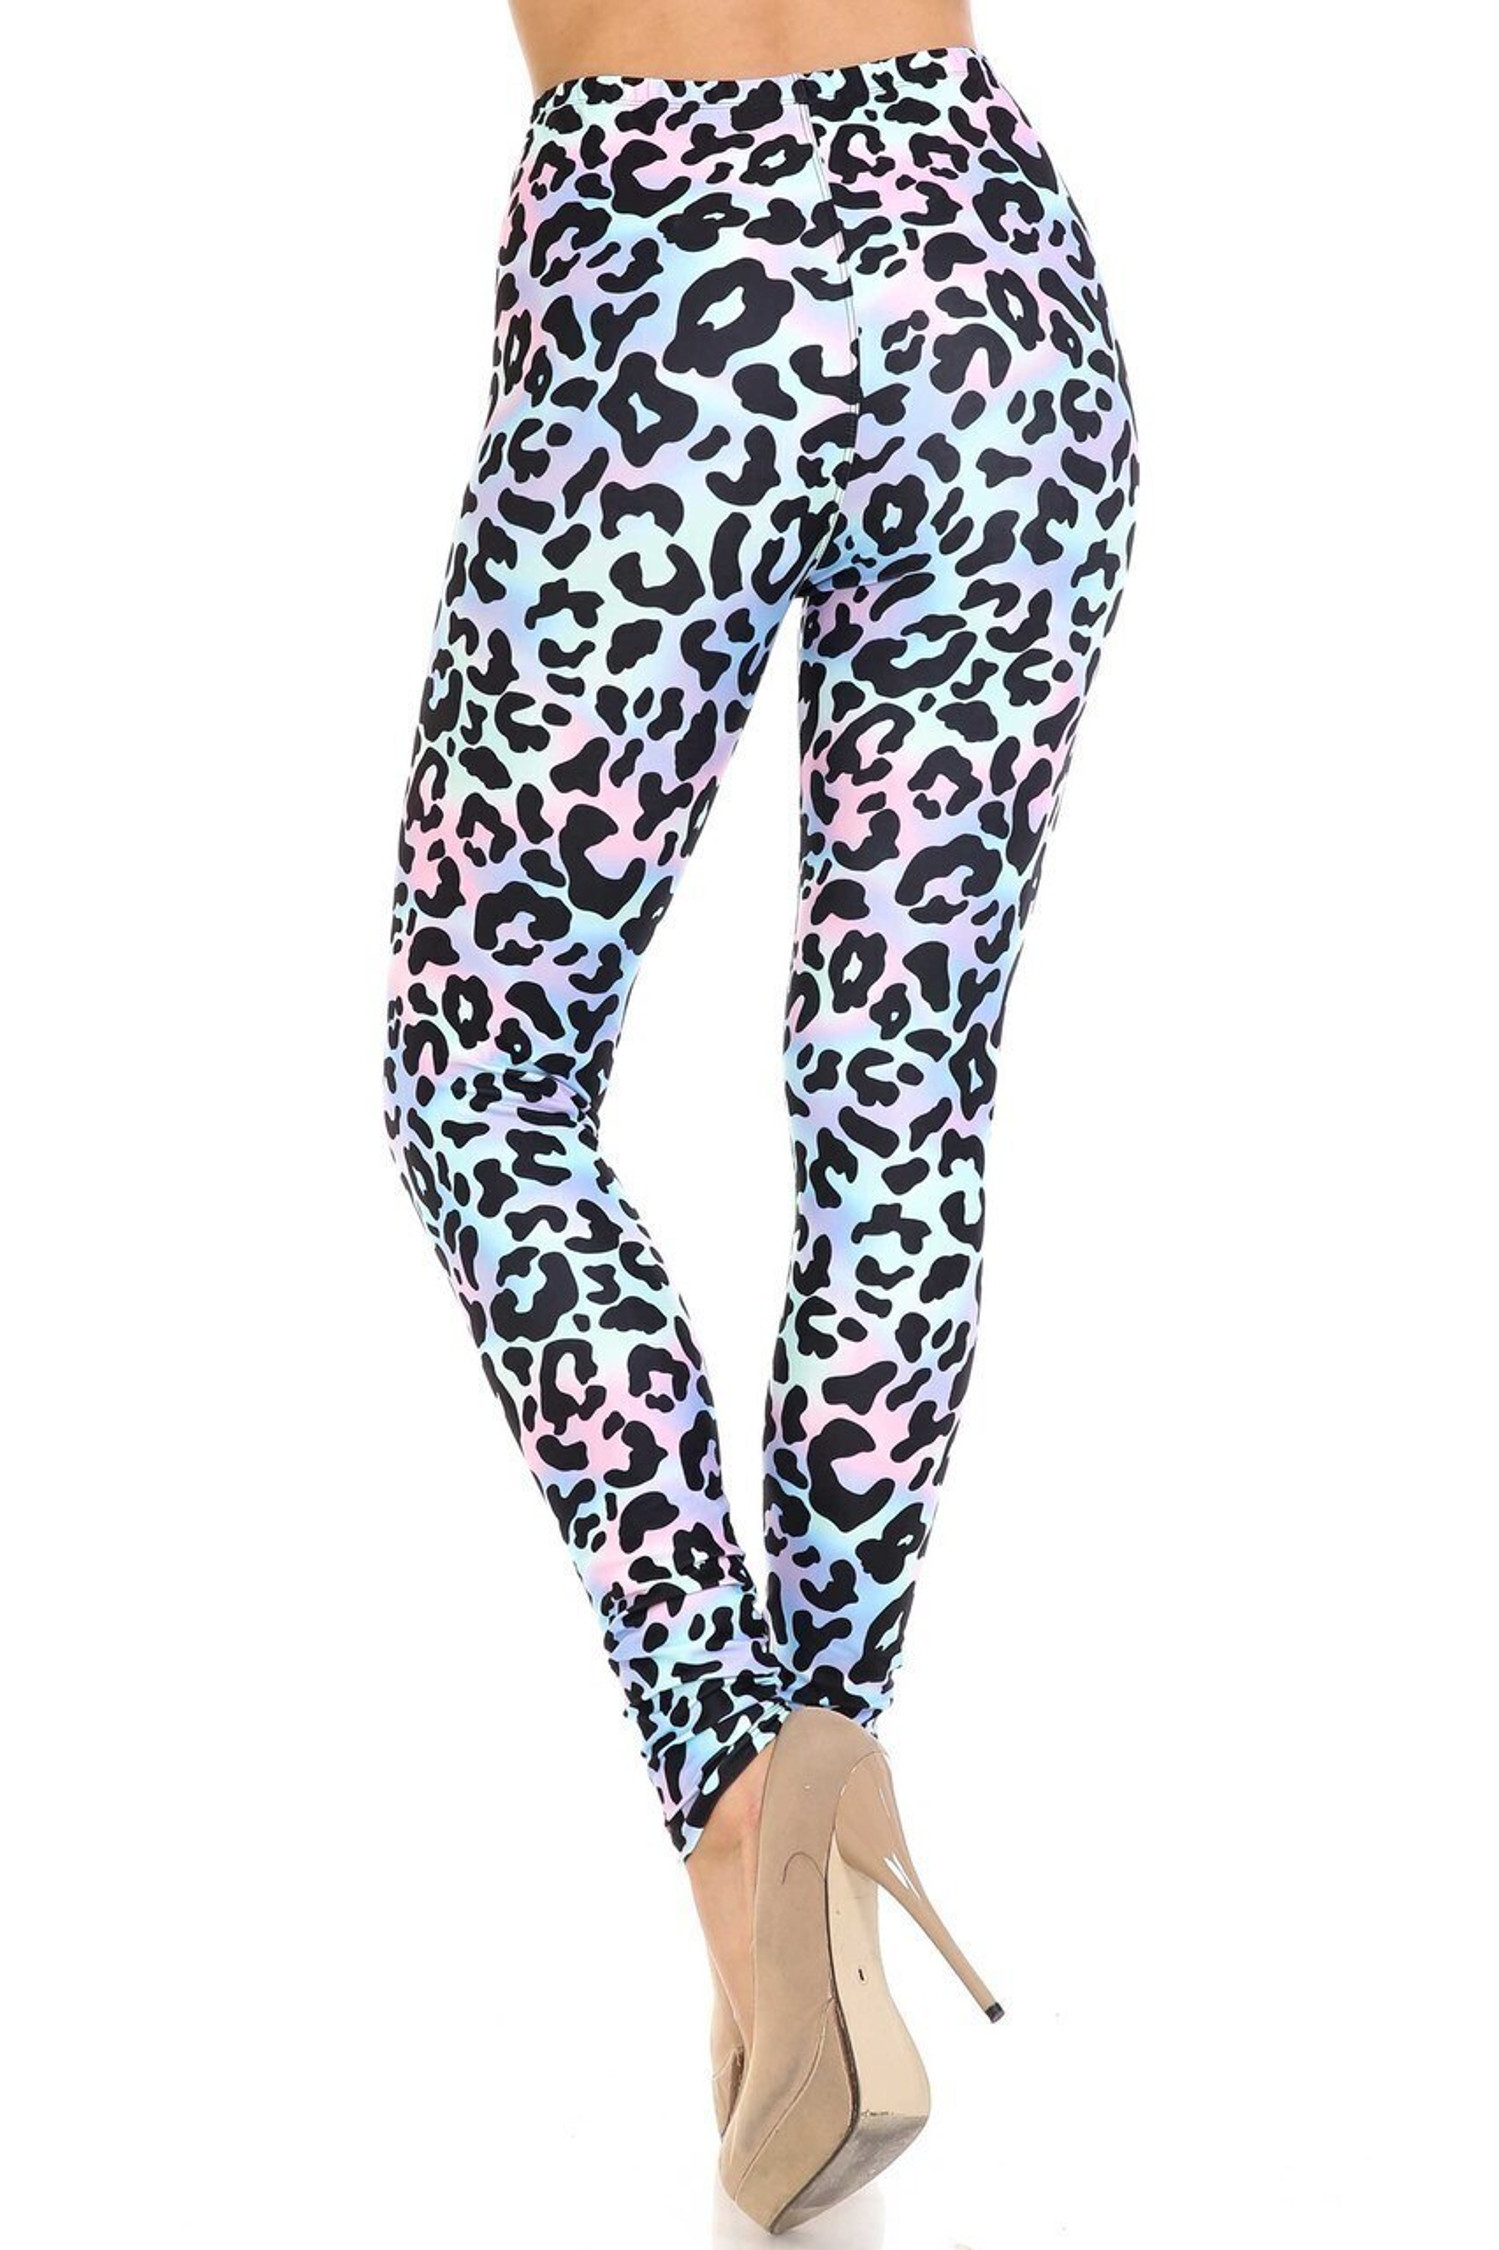 Creamy Soft Chromatic Leopard Extra Plus Size Leggings - 3X-5X - By USA Fashion™